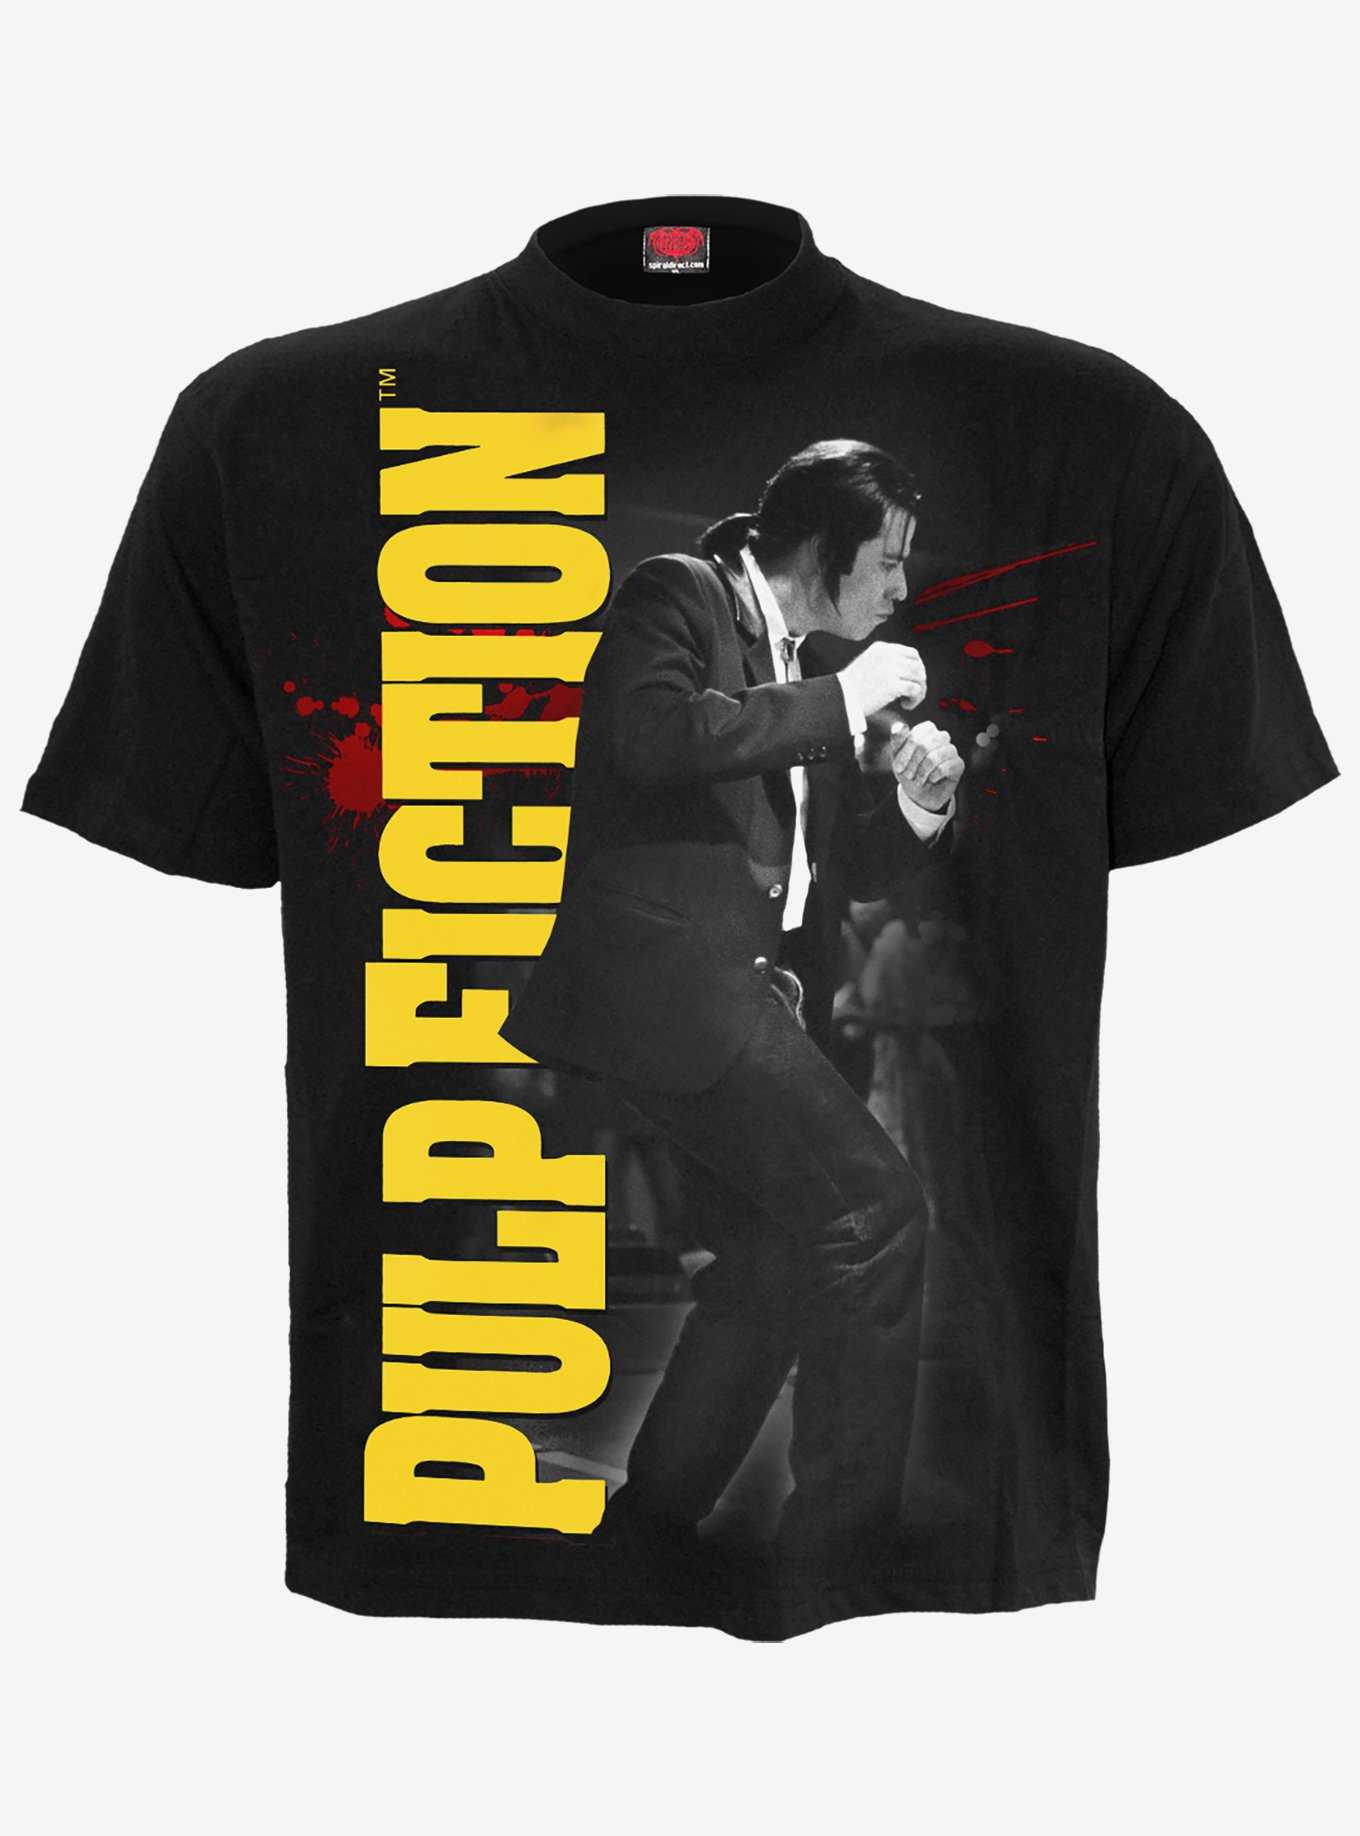 Pulp Fiction Dance T-Shirt, , hi-res